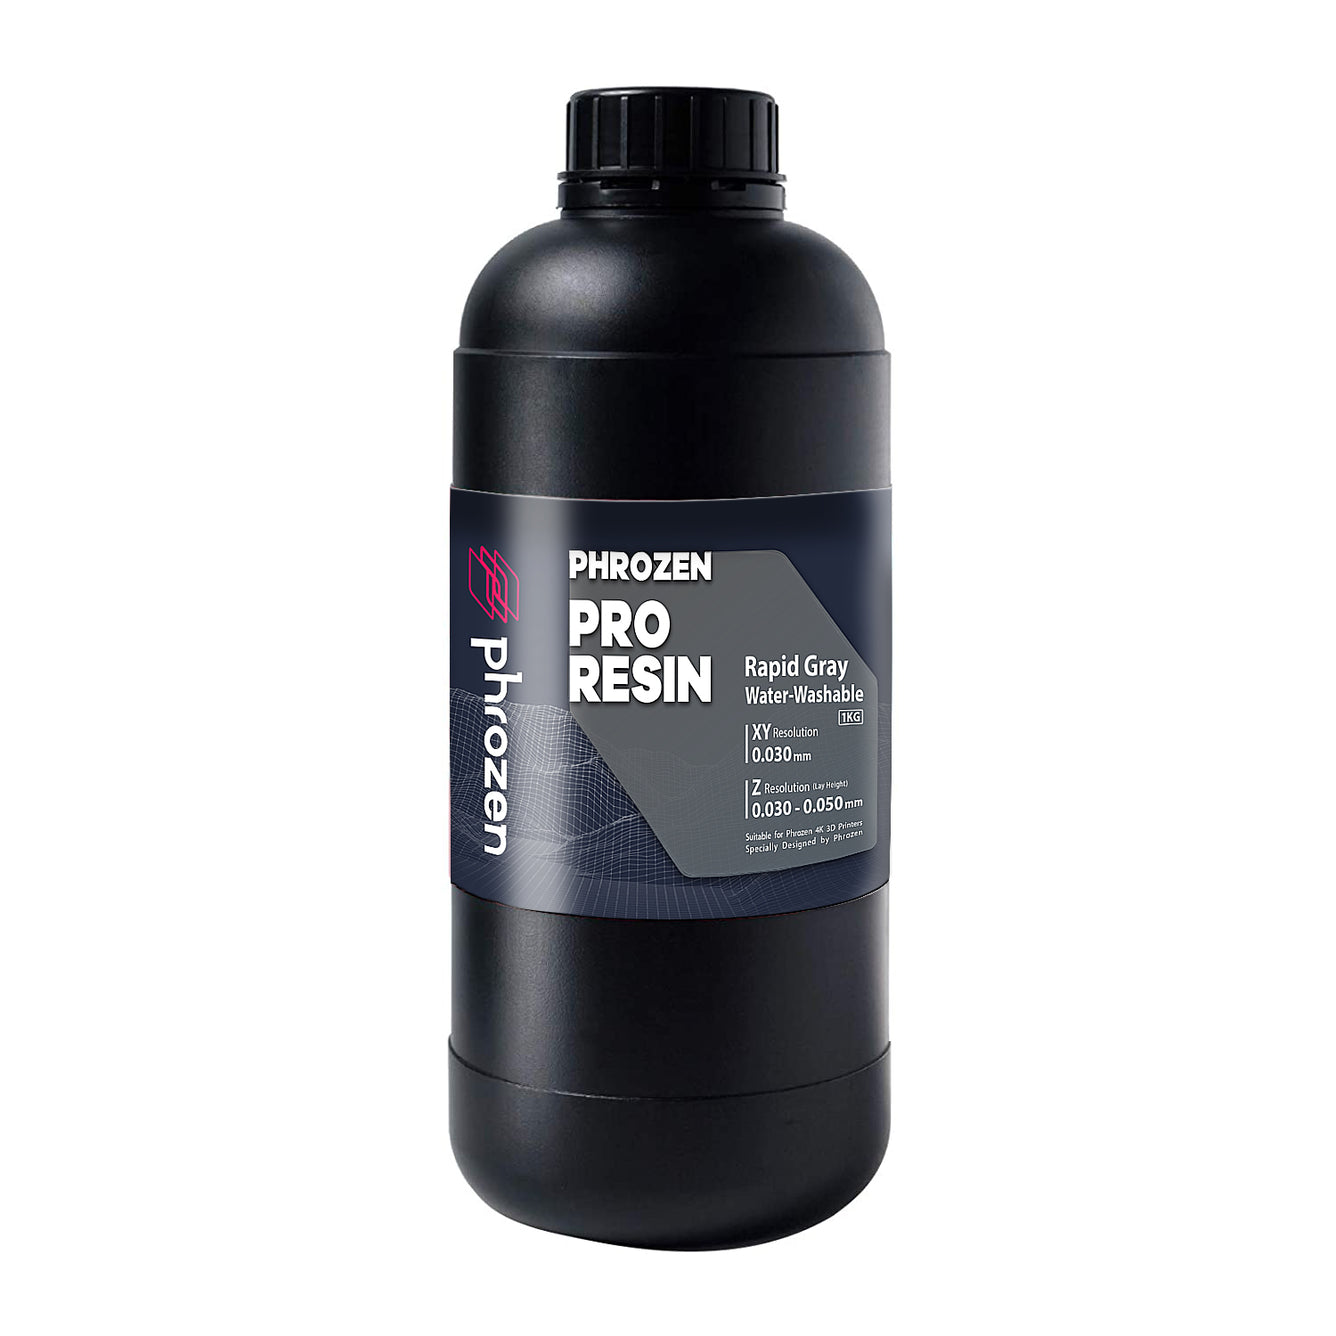 Phrozen Pro Series Water-Washable Resin Model Grey 1KG